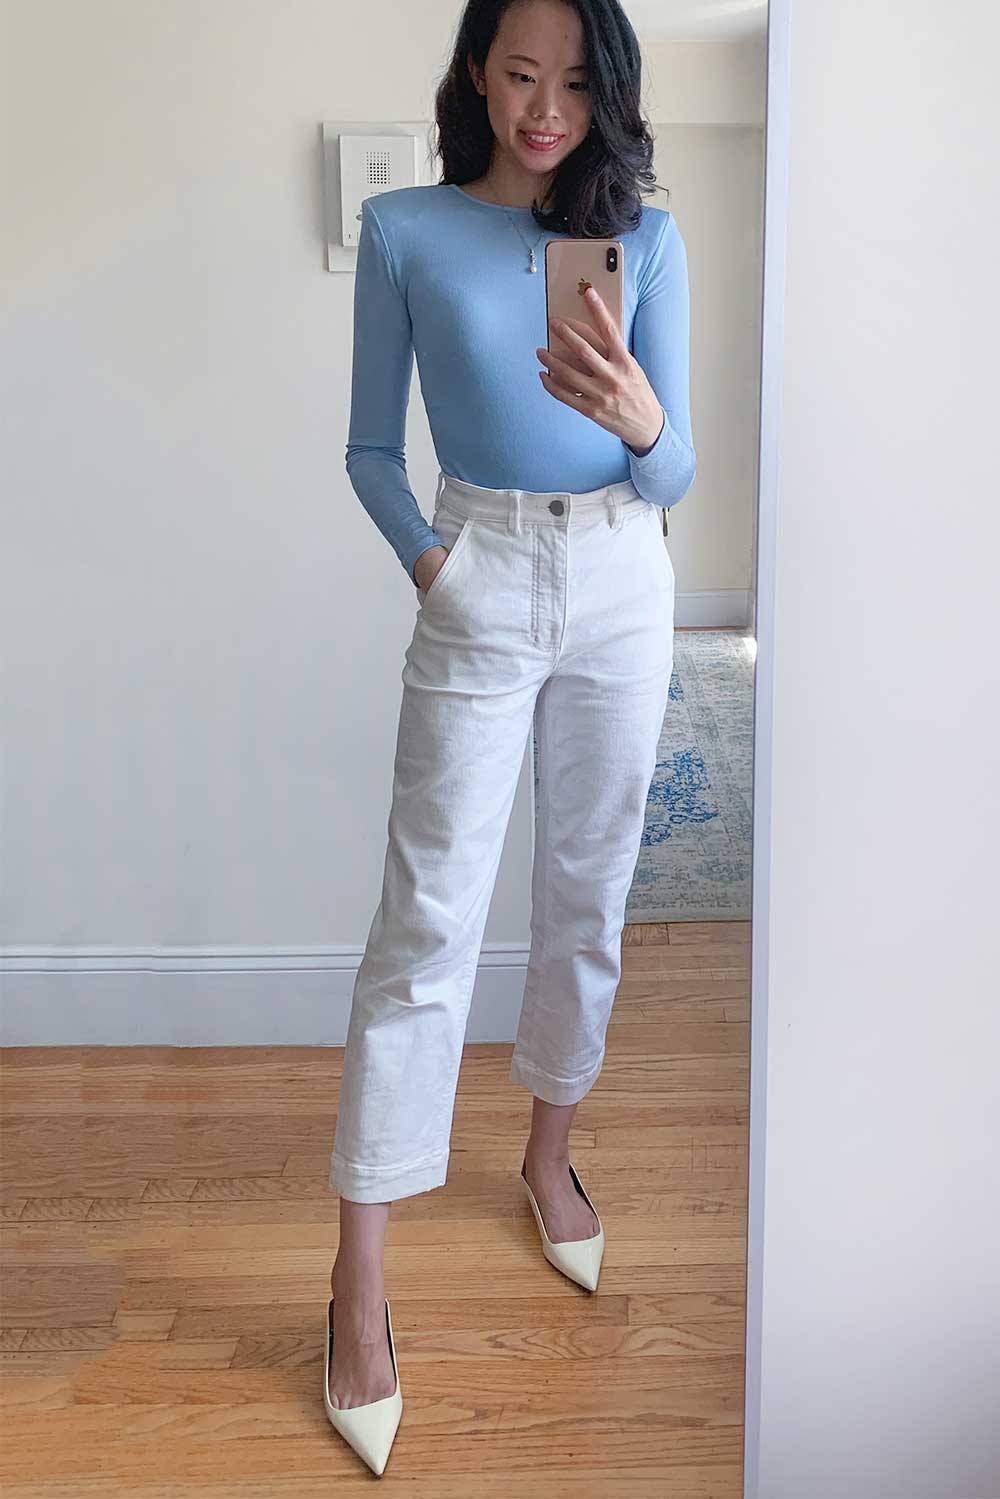 Zara Haul: Late Summer / Early Fall 2020 Outfit Ideas